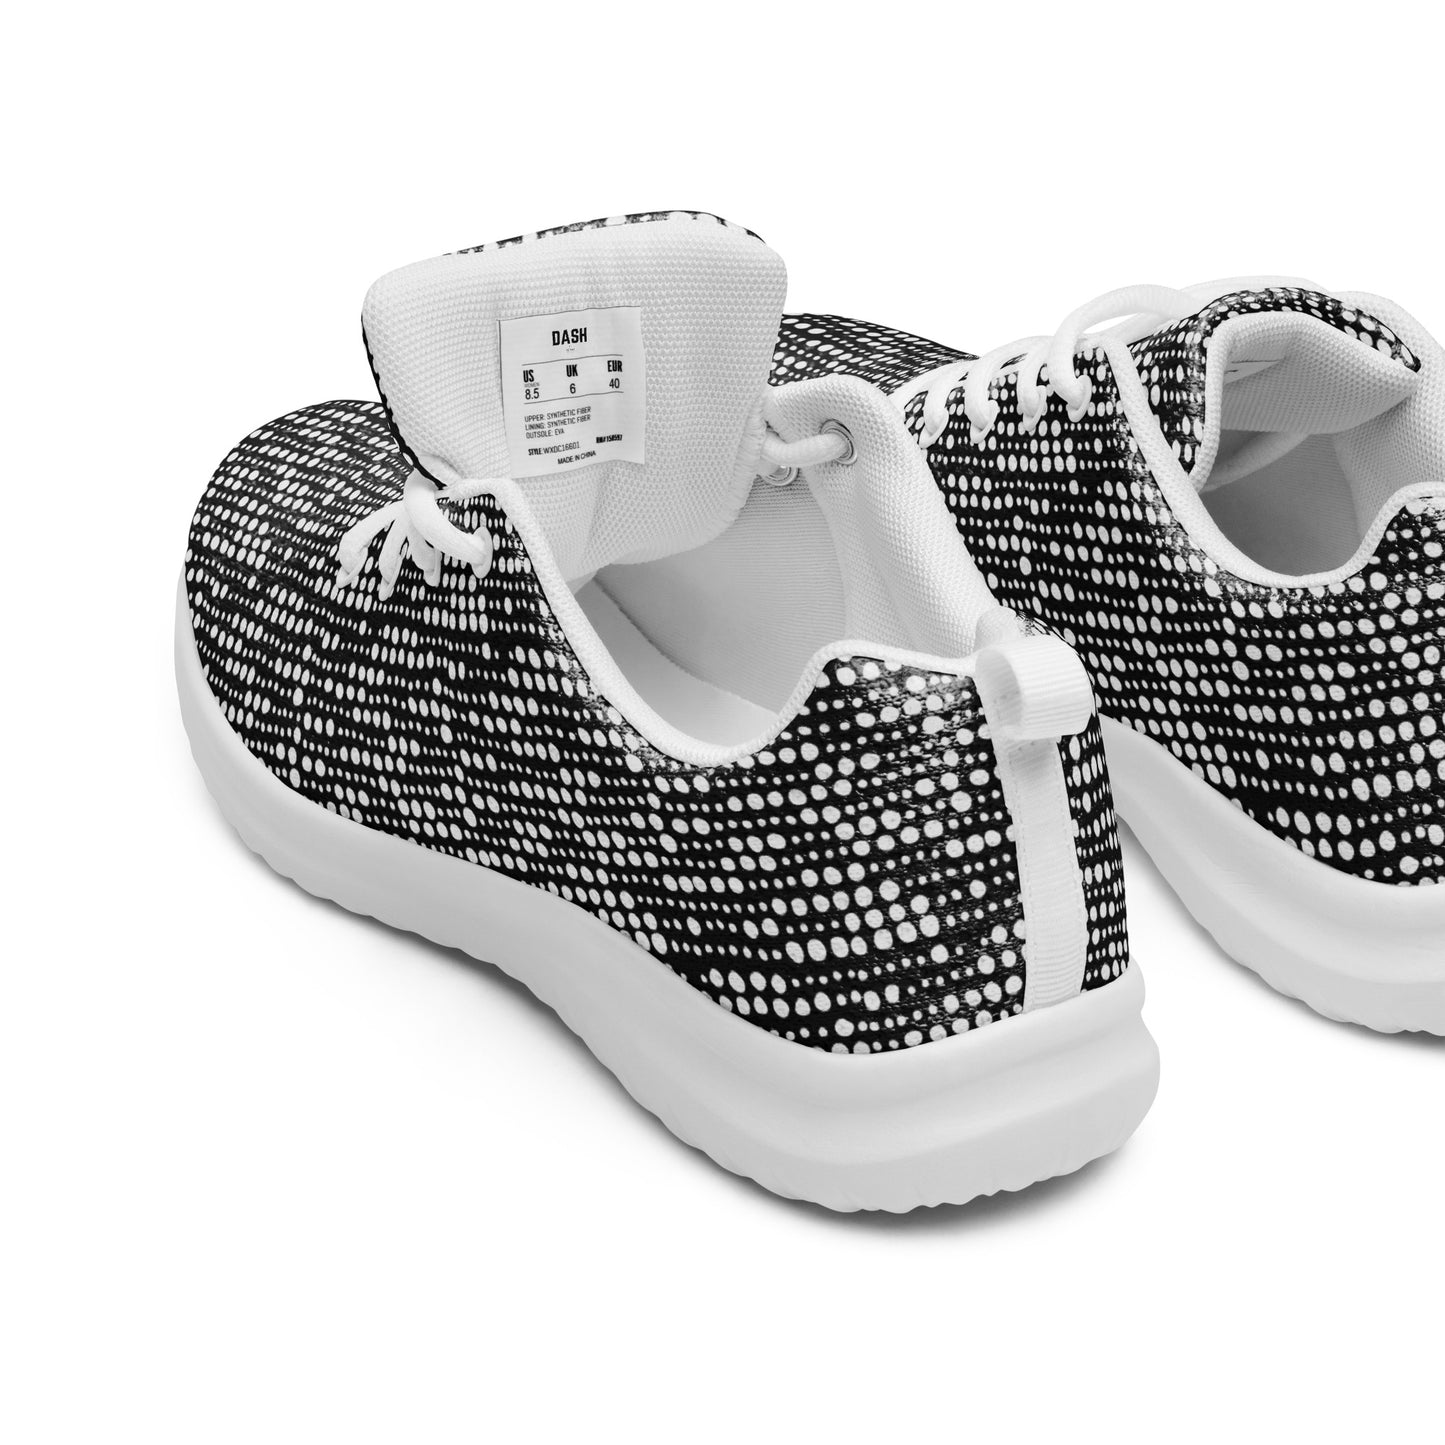 DASH Code Black Men’s Athletic Shoes Lightweight Breathable Design by IOBI Original Apparel